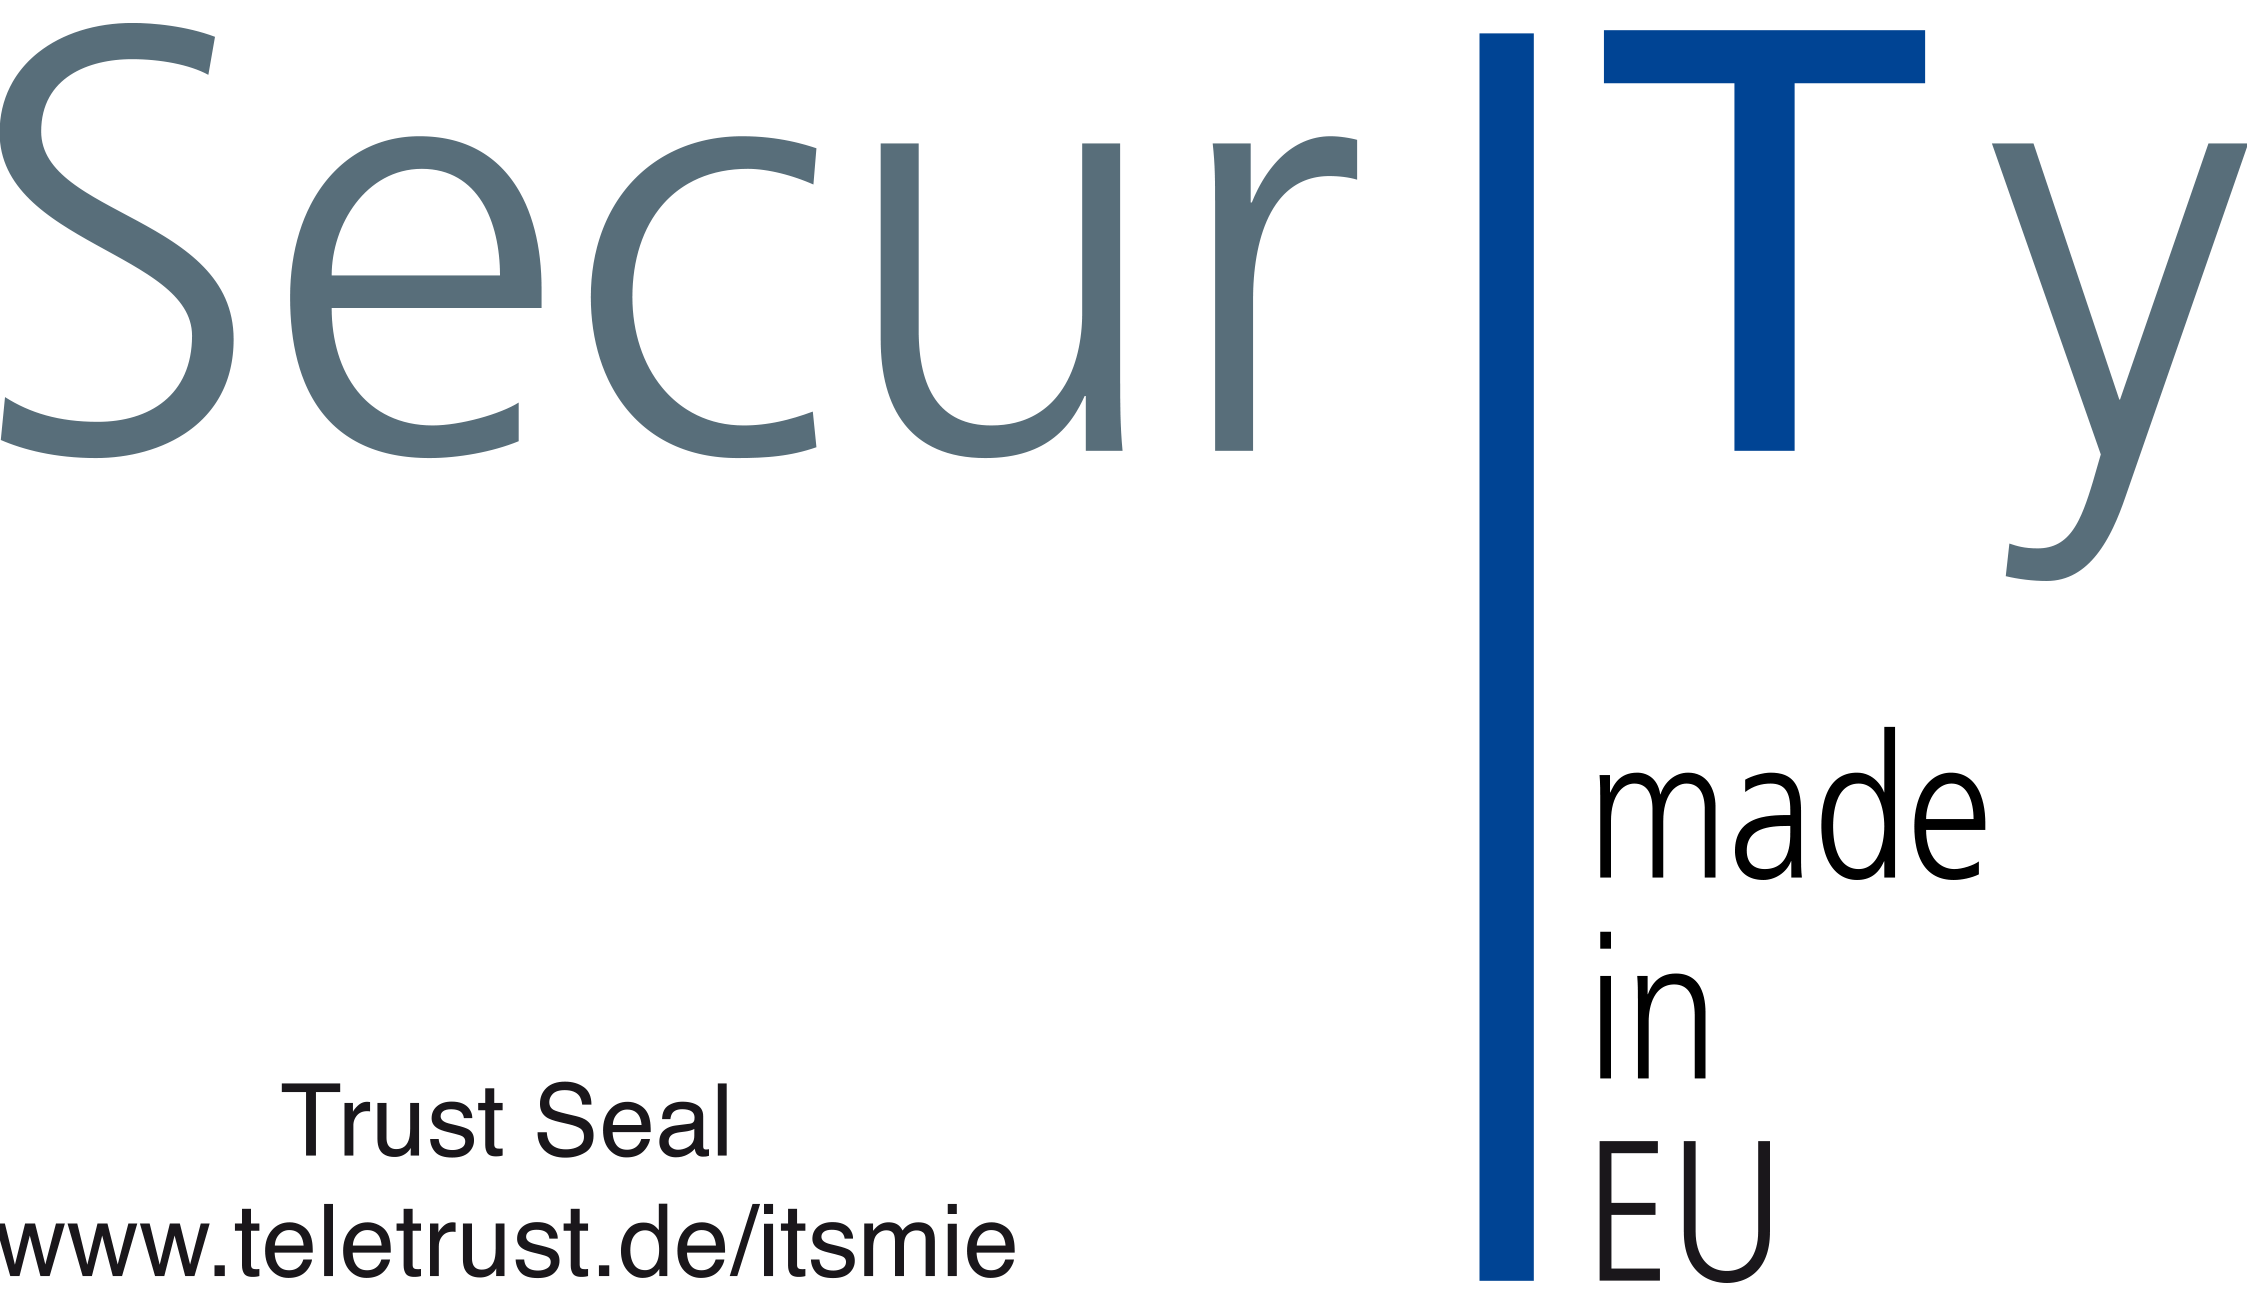 IT Security made in EU_TeleTrusT Seal